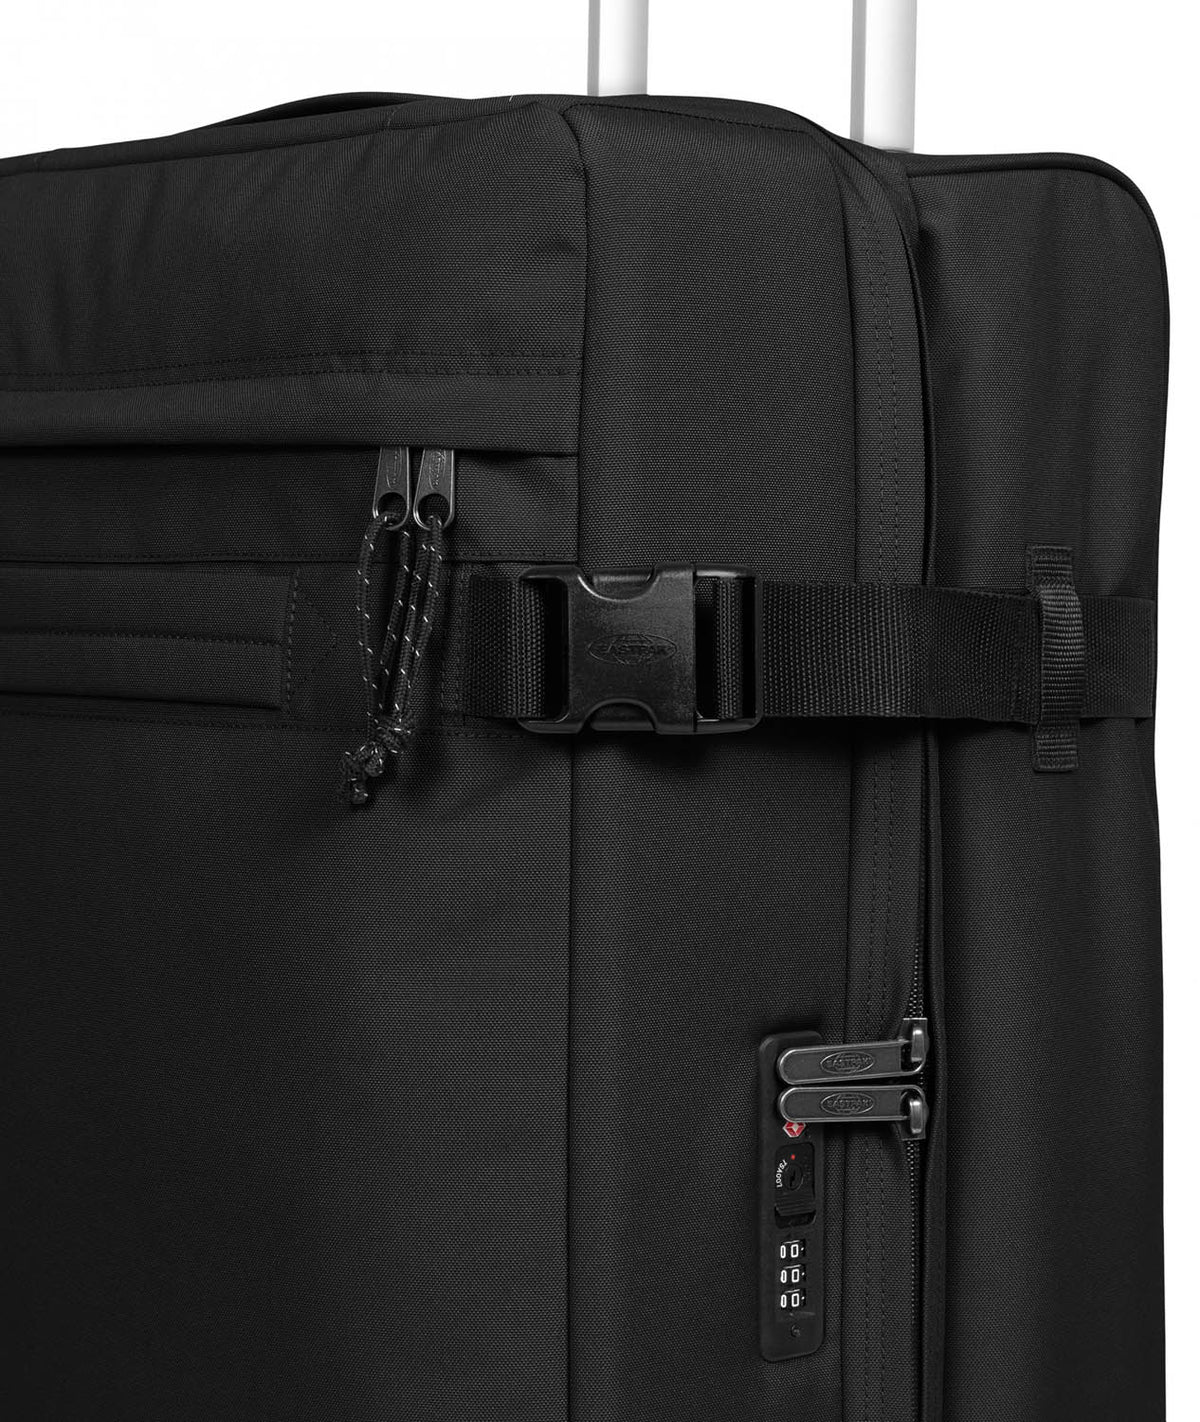 Eastpak Transit'R 4 M Suitcase - Black